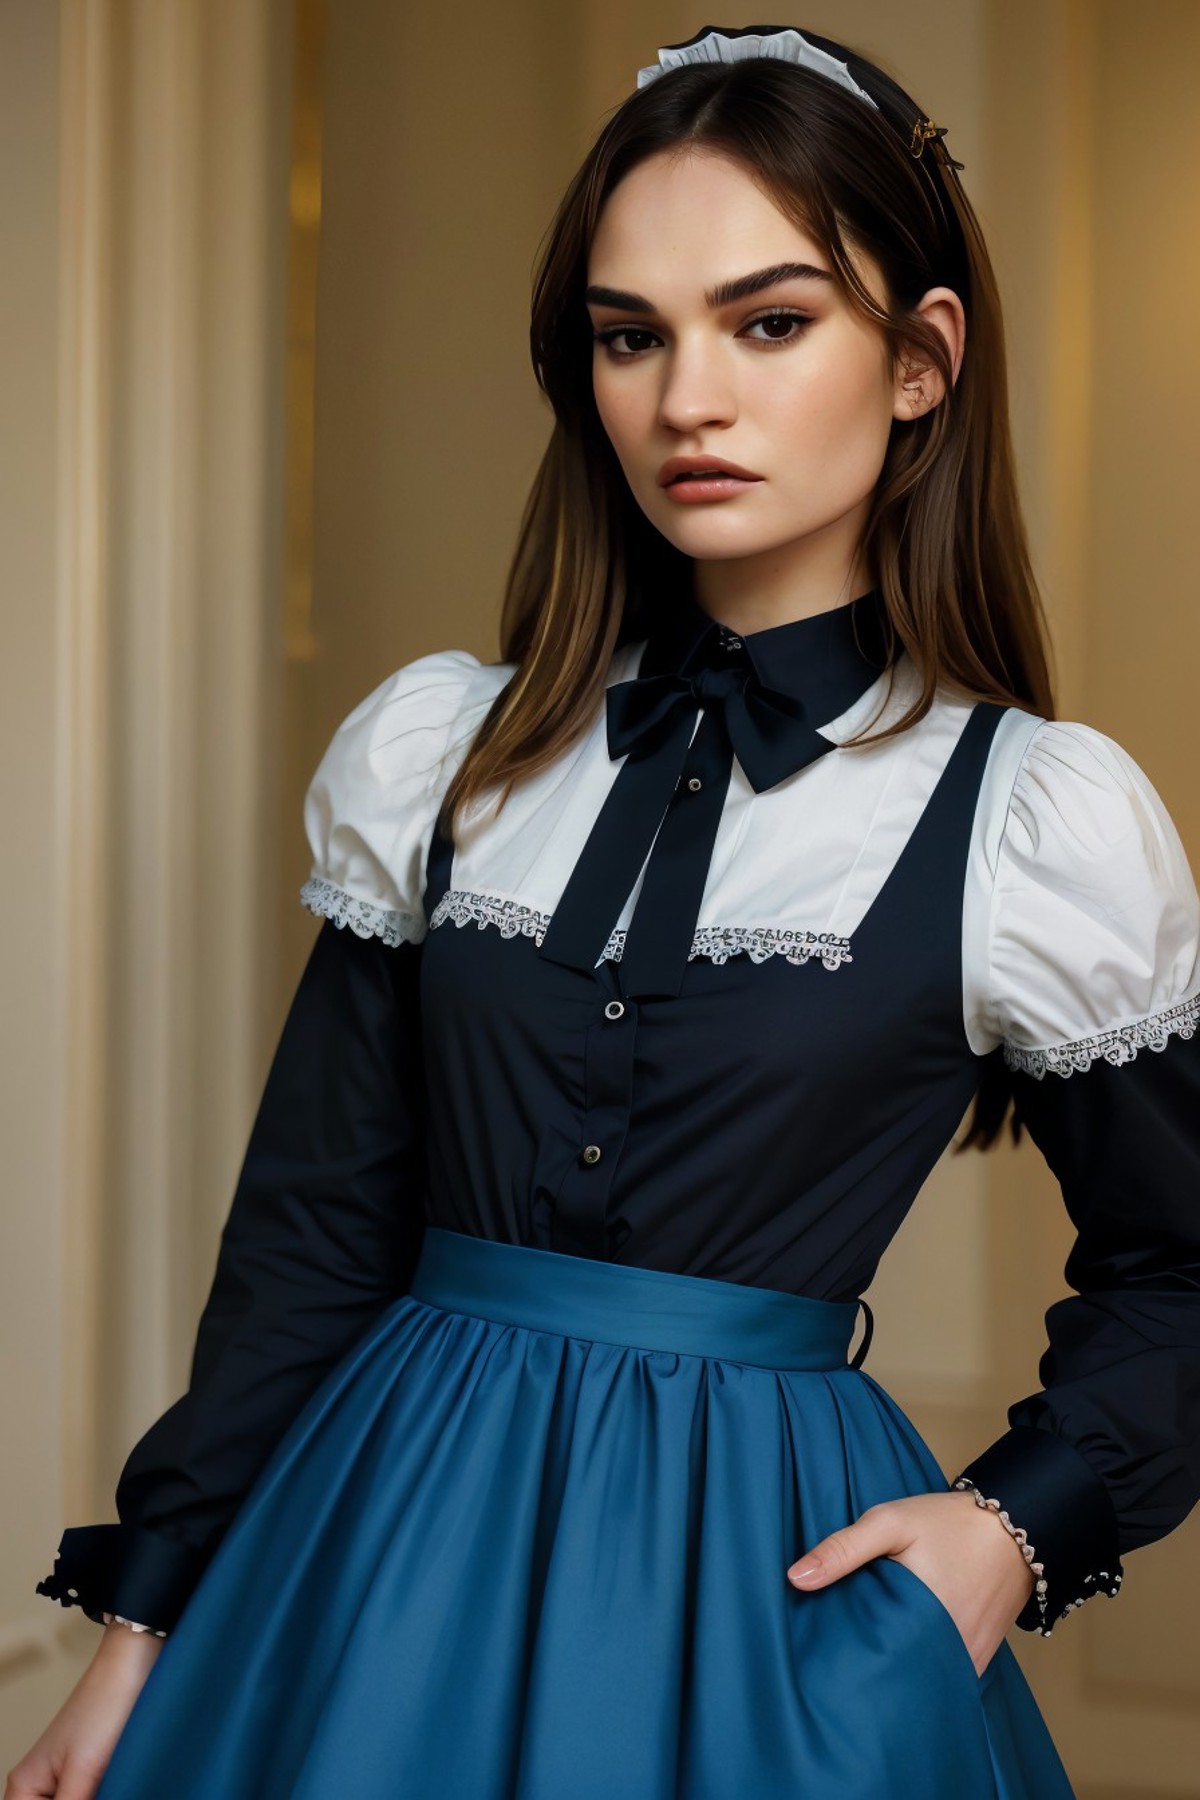 Victorian Maid Dress image by demoran